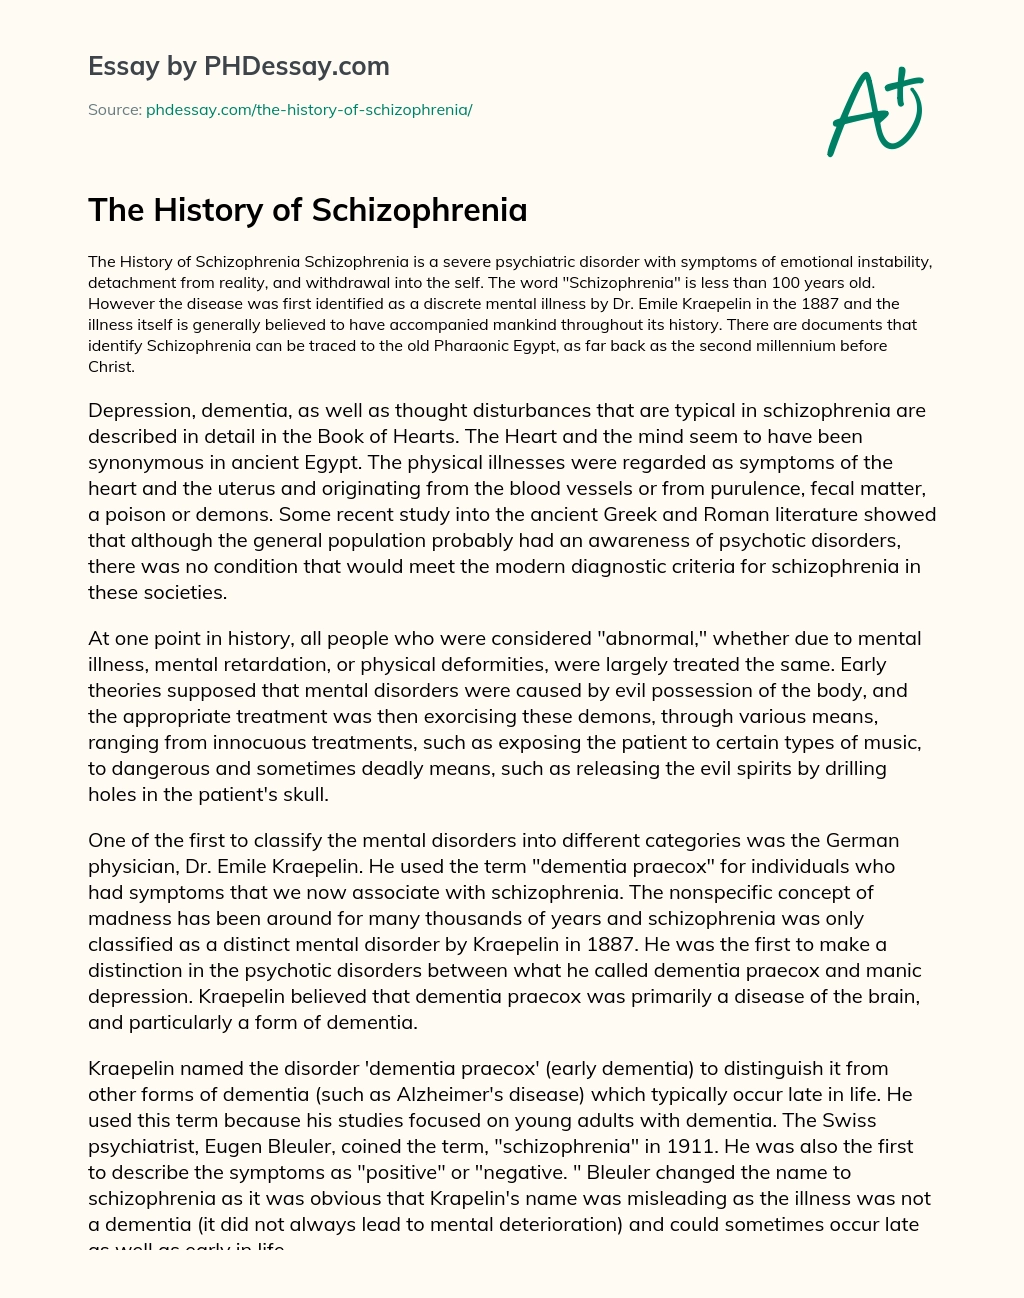 The History of Schizophrenia essay